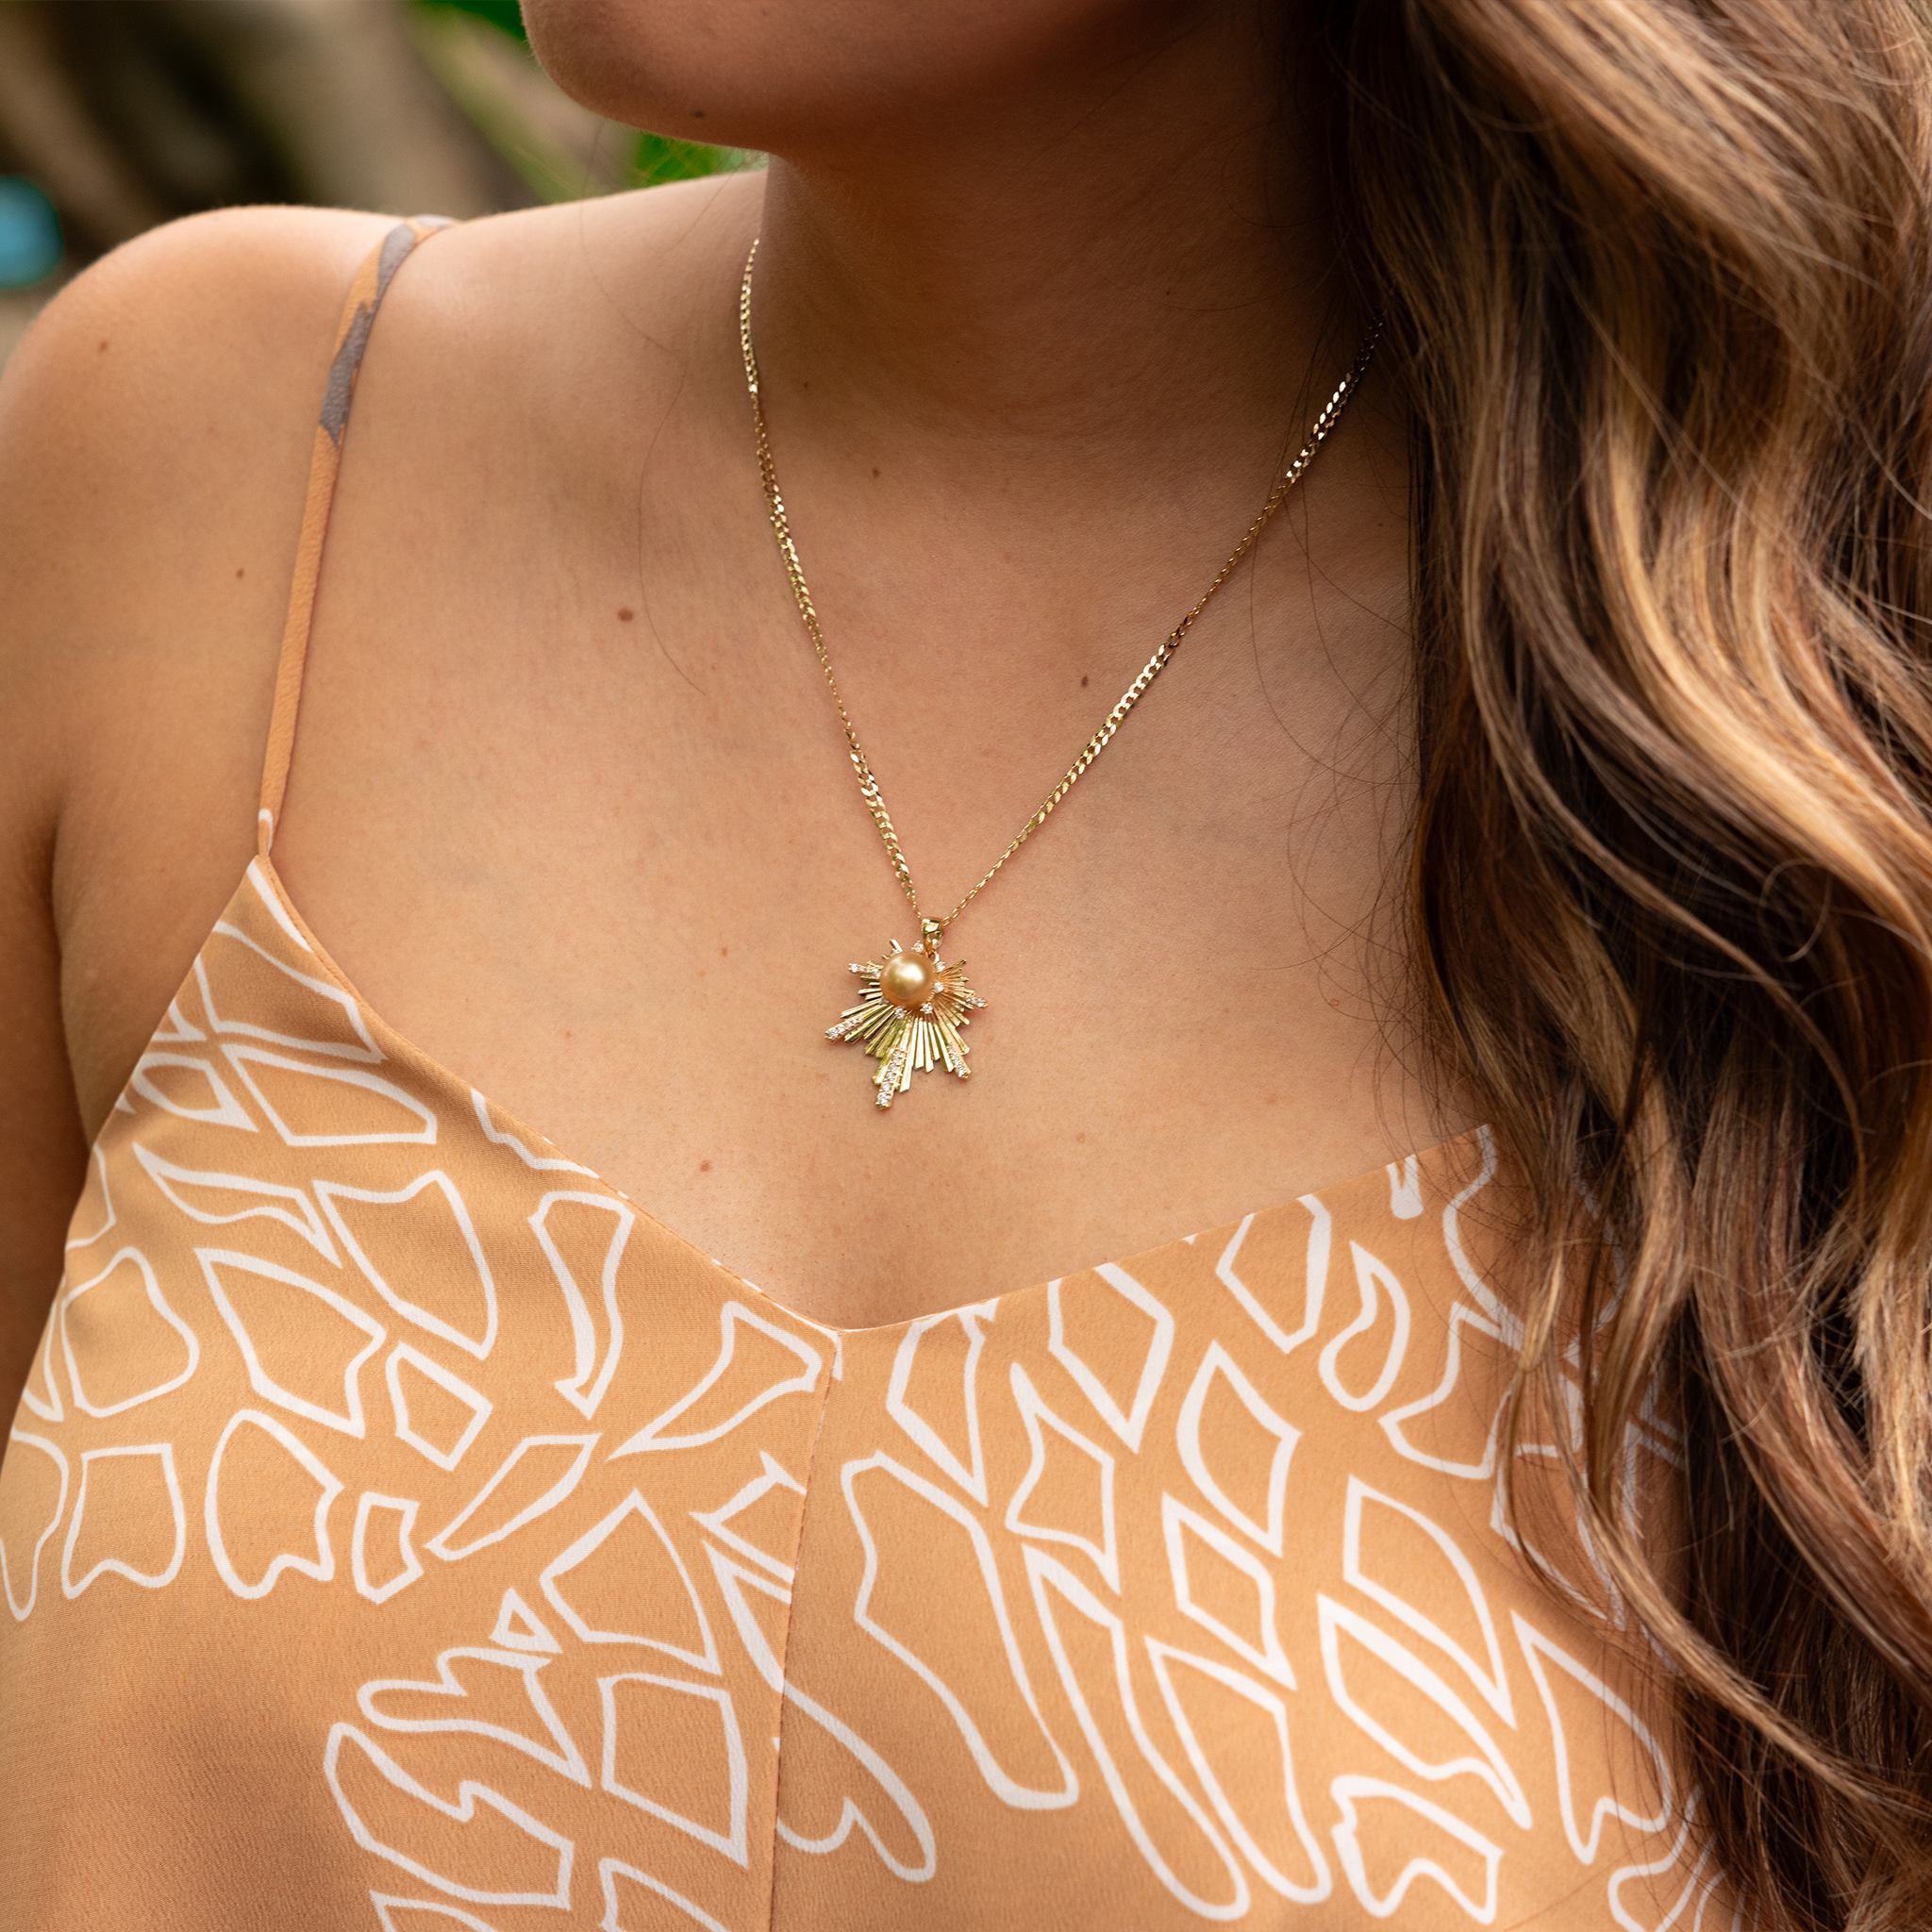 E Hoʻāla South Sea Gold Pearl Pendant in Gold with Diamonds - 27mm